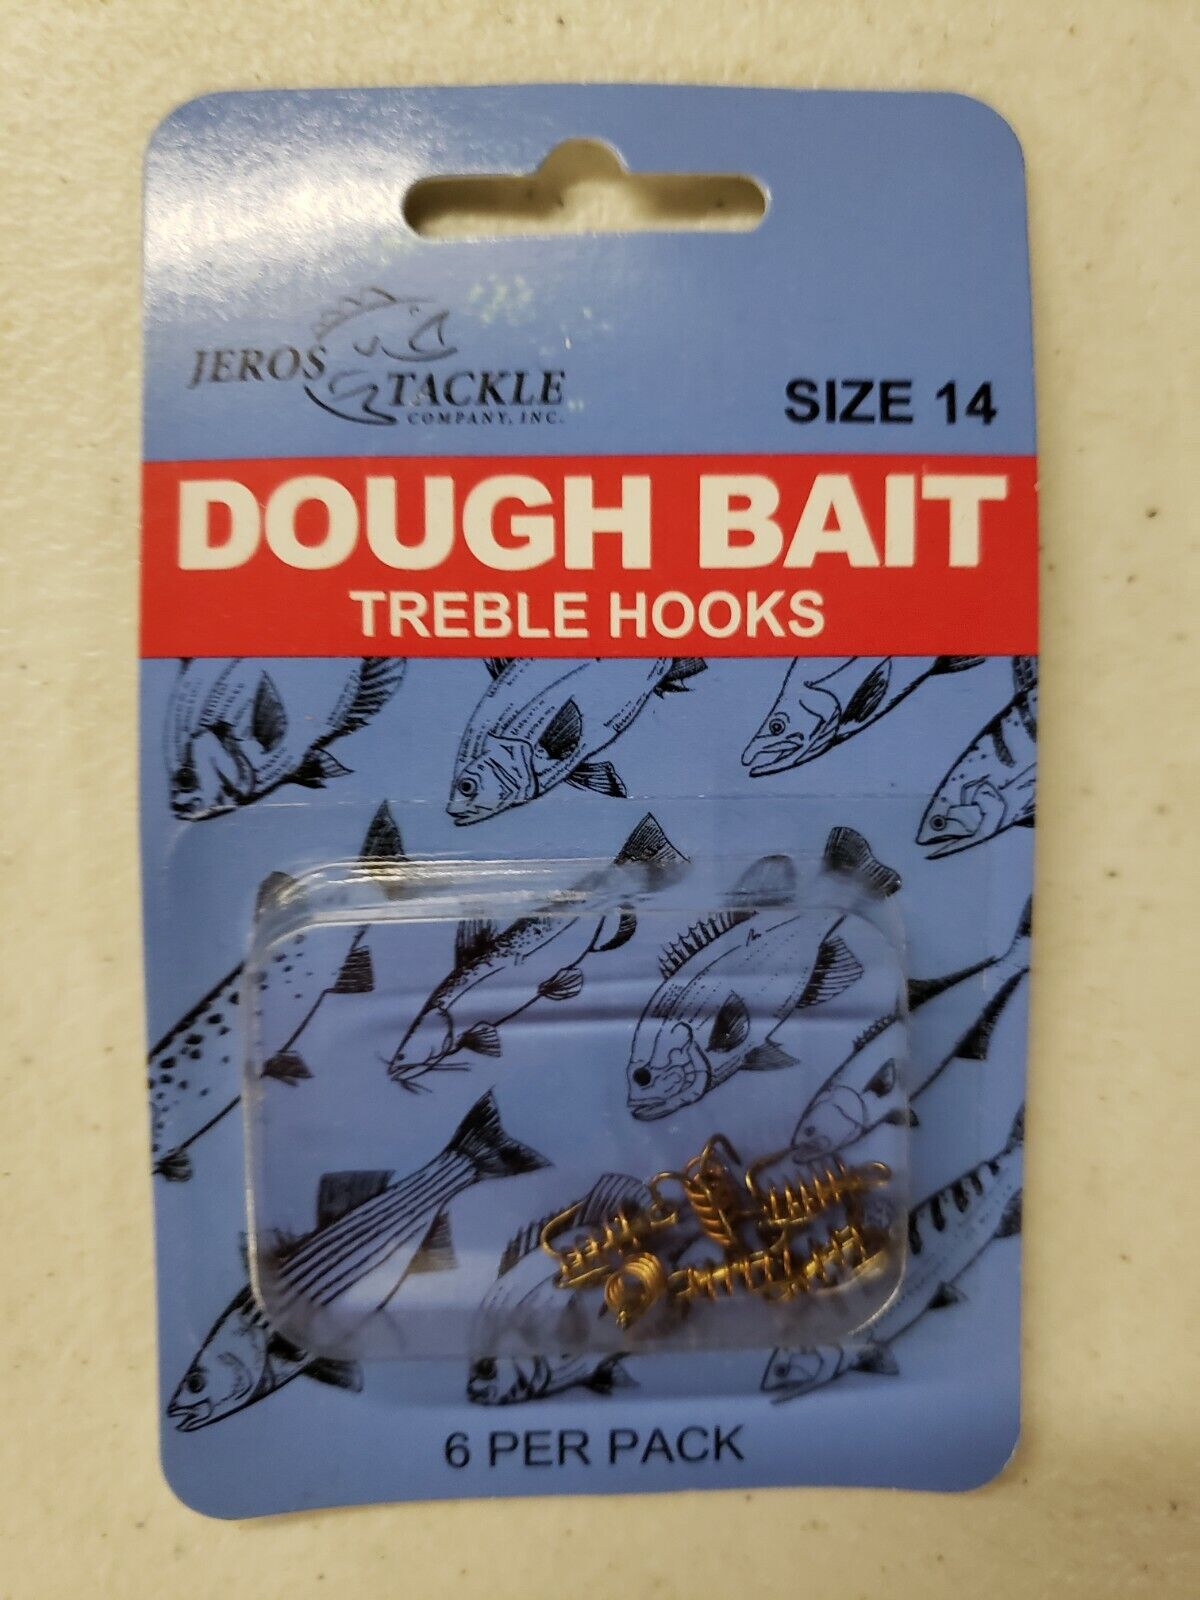 Size 14 Scotchline 6-pack of Dough-Bait Treble Hooks